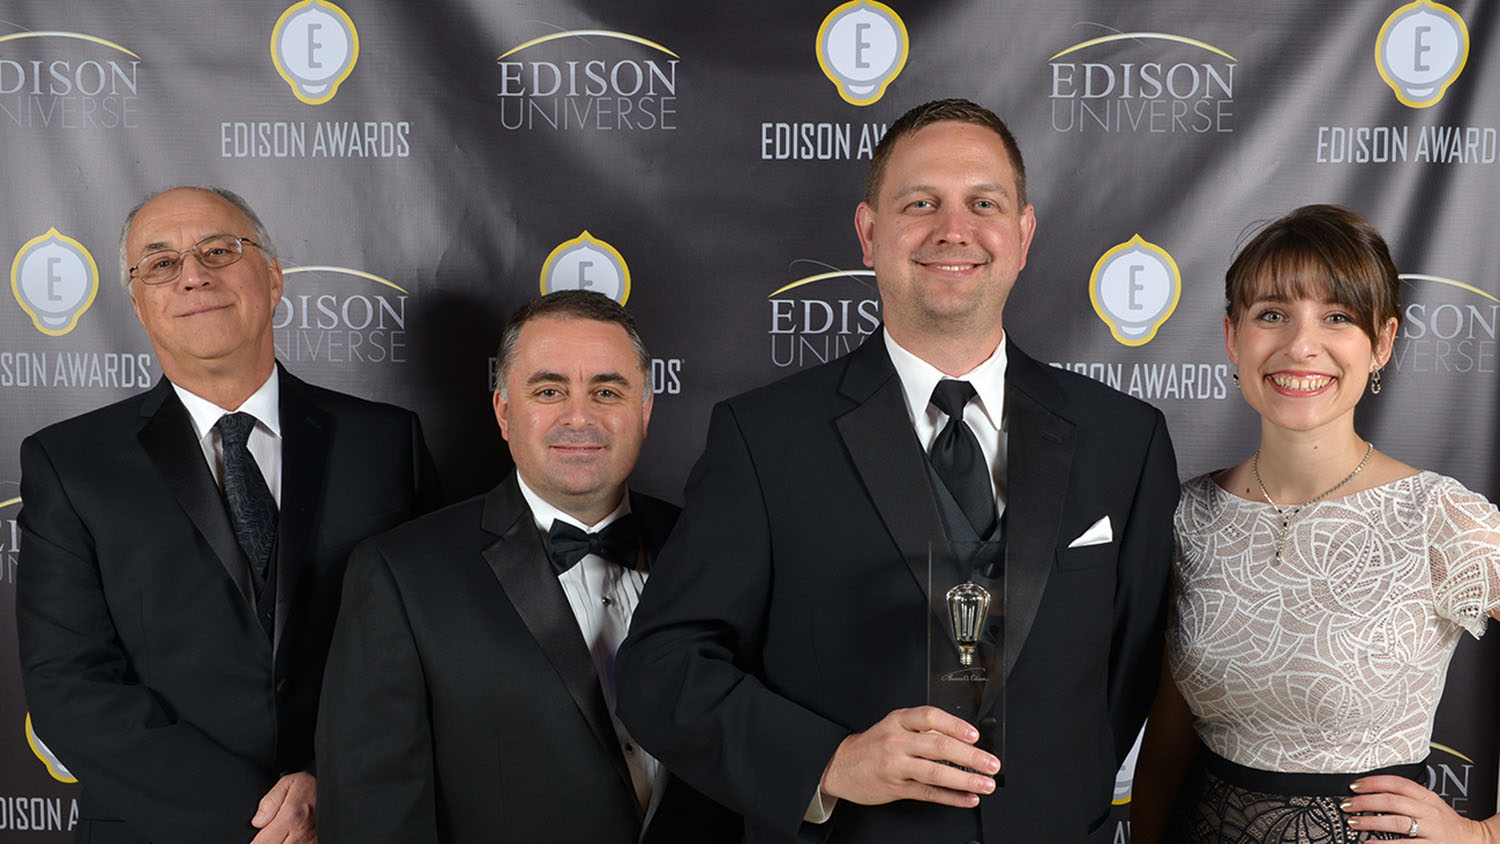 Josip Simunovic (left), Pablo Coronel, Michael Druga and Amanda Vargochik (right) at the 2015 Edison Innovation Awards.